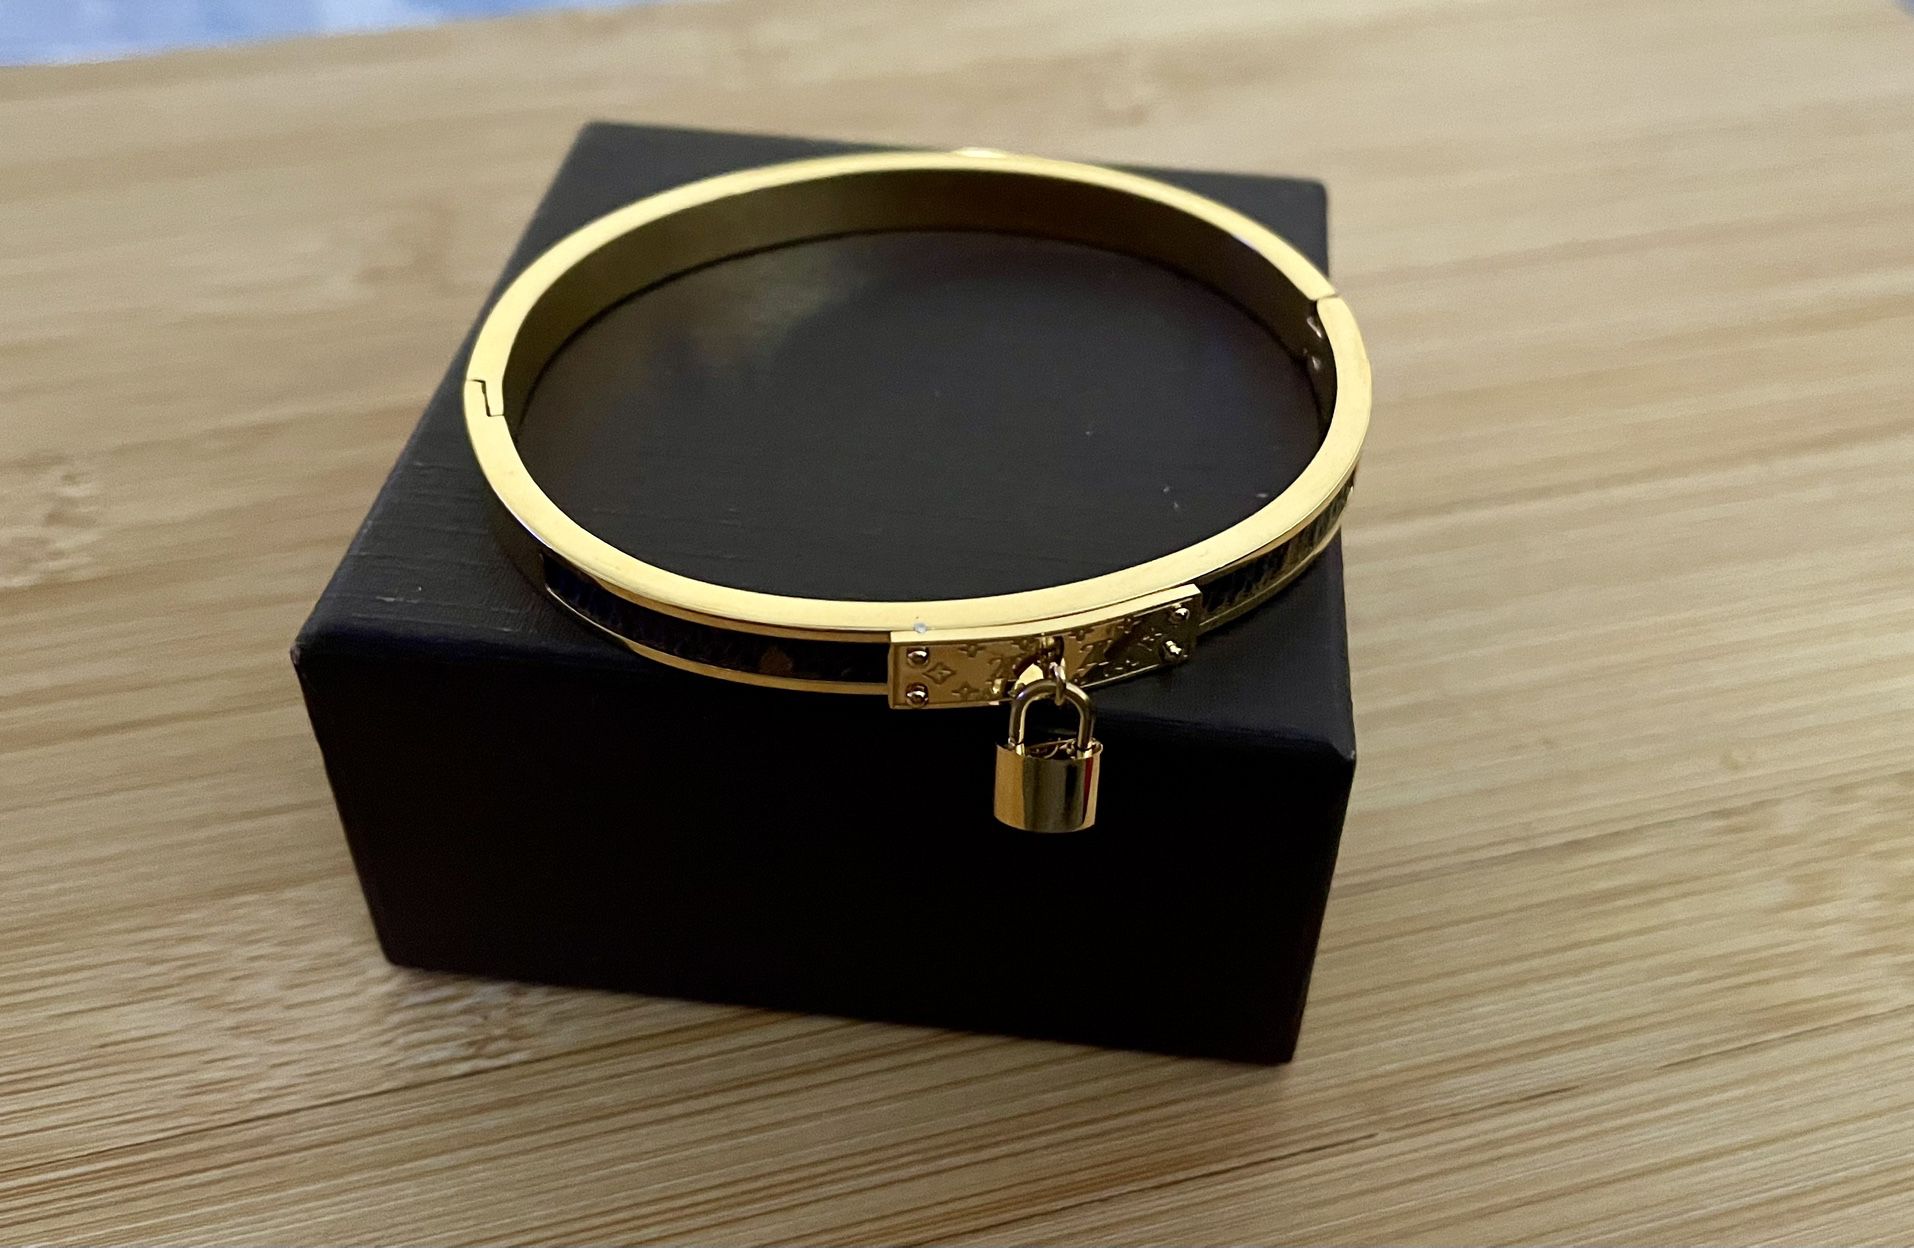 Bangle Gold Plated Bracelet